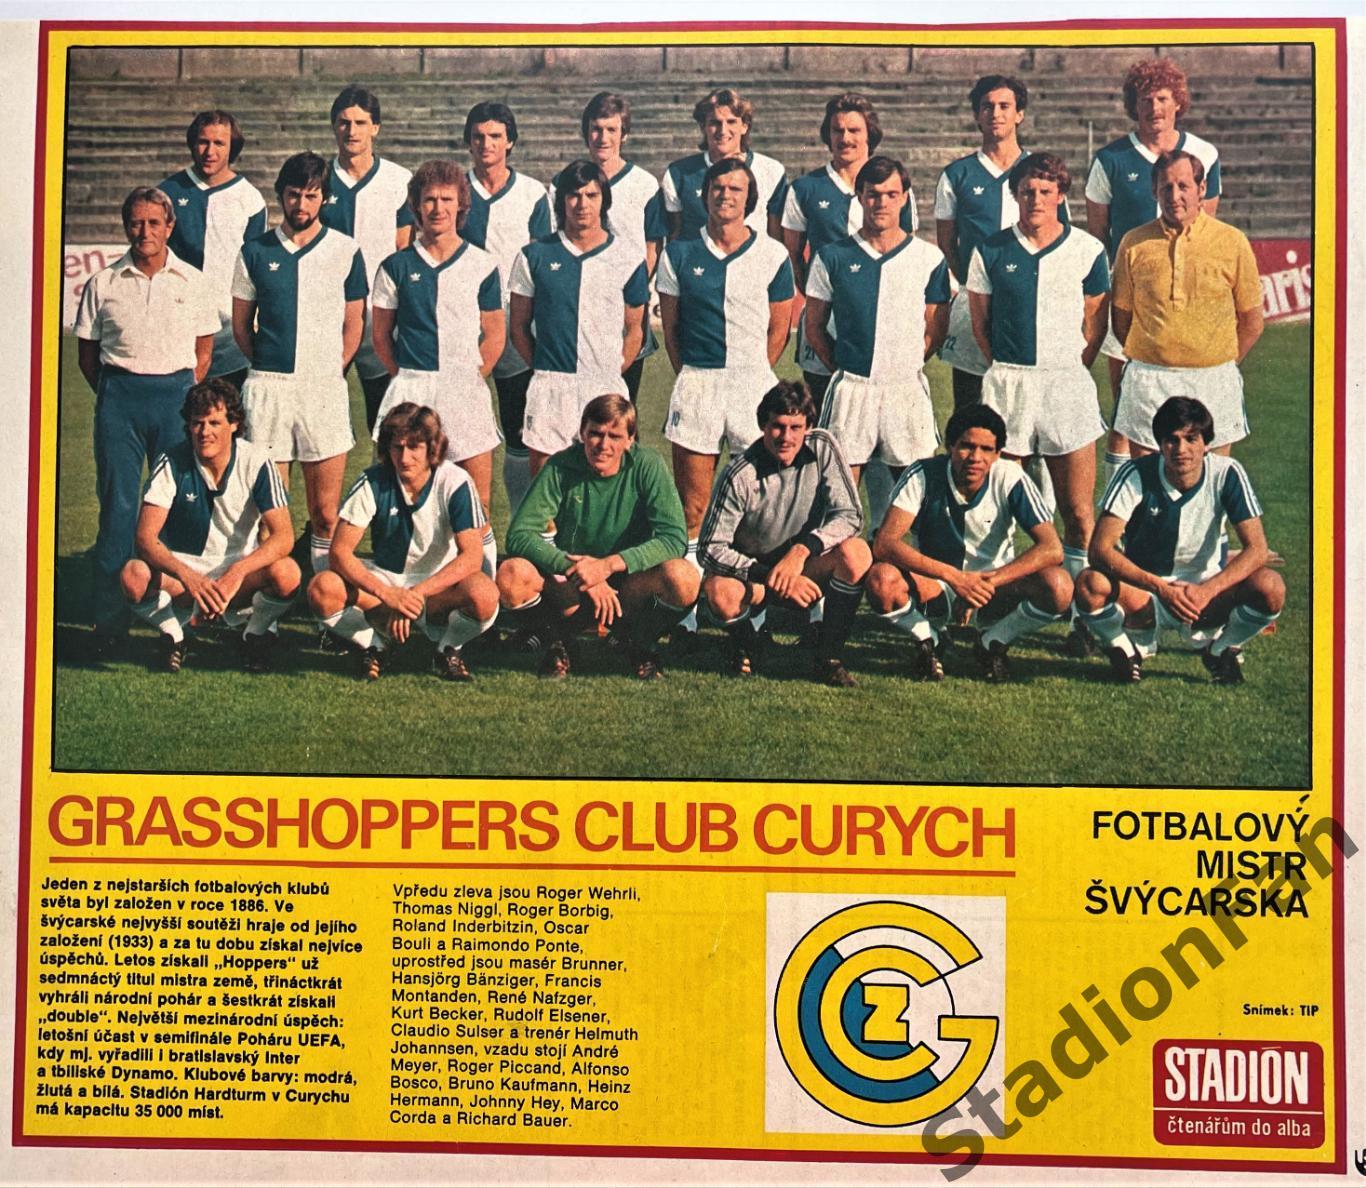 Постер из журнала Стадион (Stadion) - Grasshoppers, 1978.